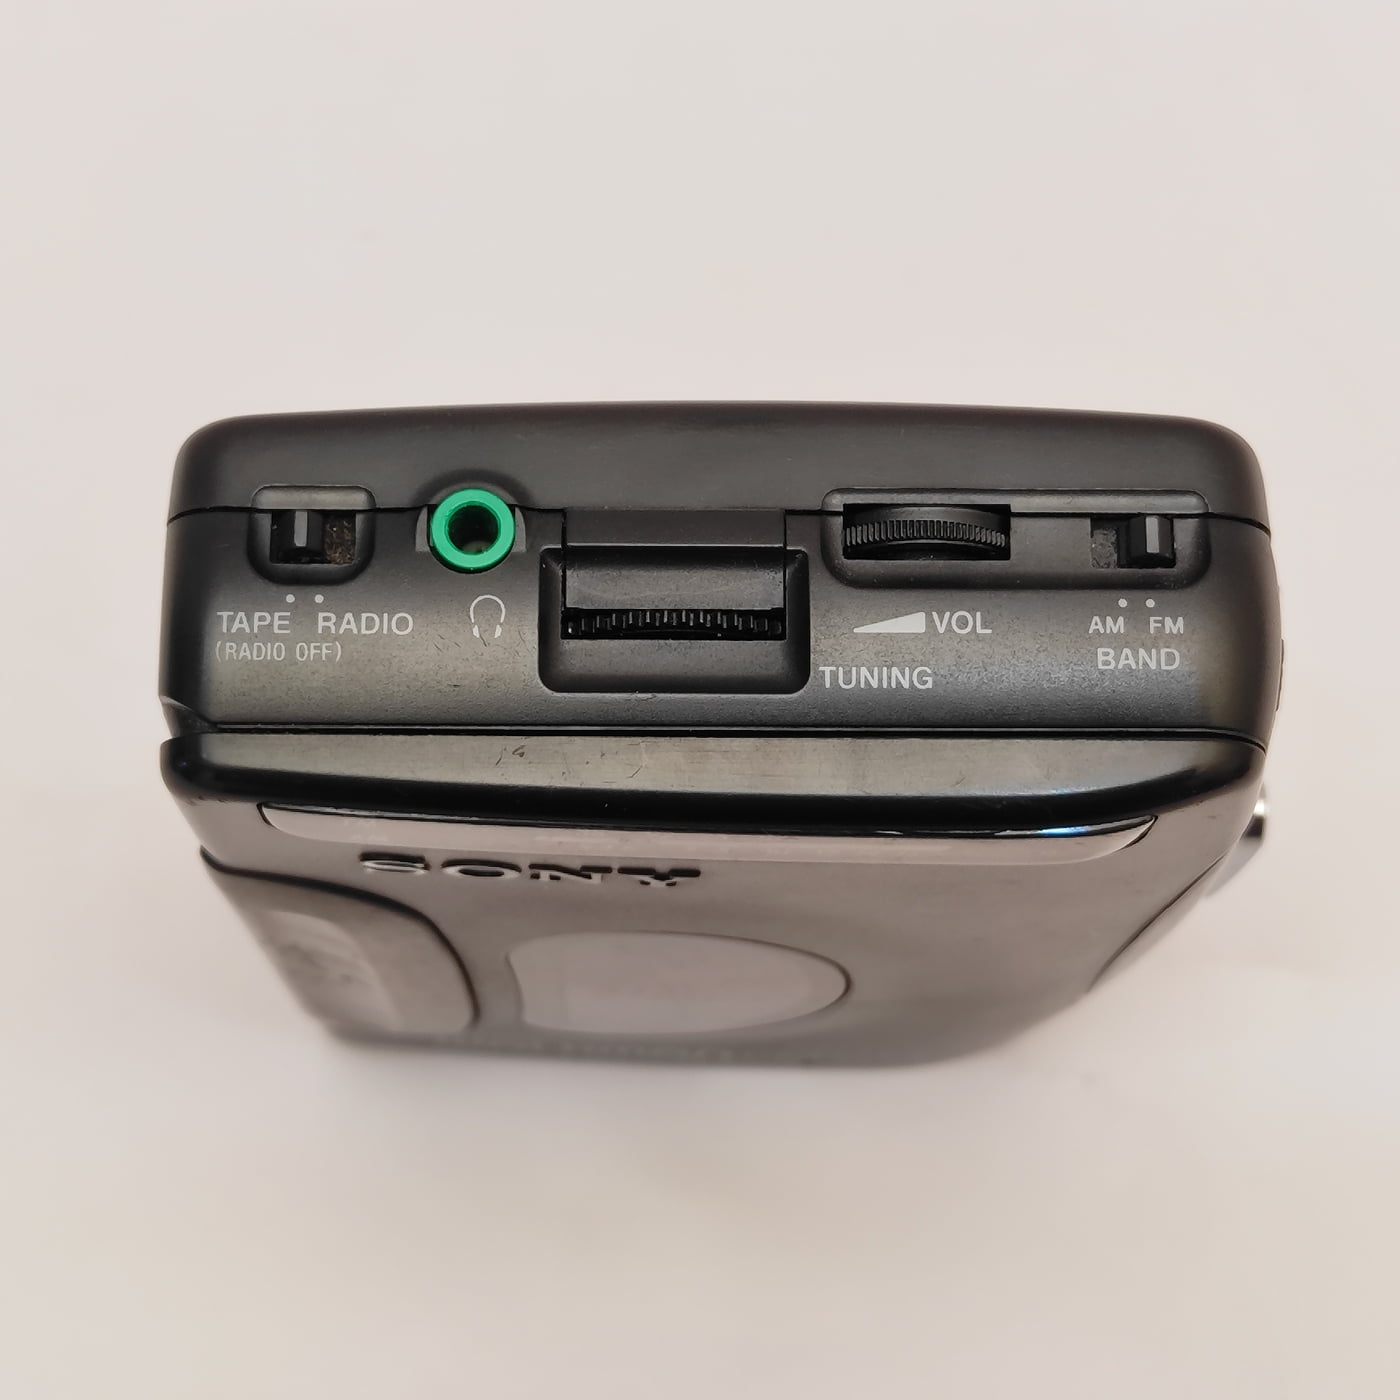 Sony Walkman WM-EX122 Portable Cassette Player Refurbished by Retrospekt